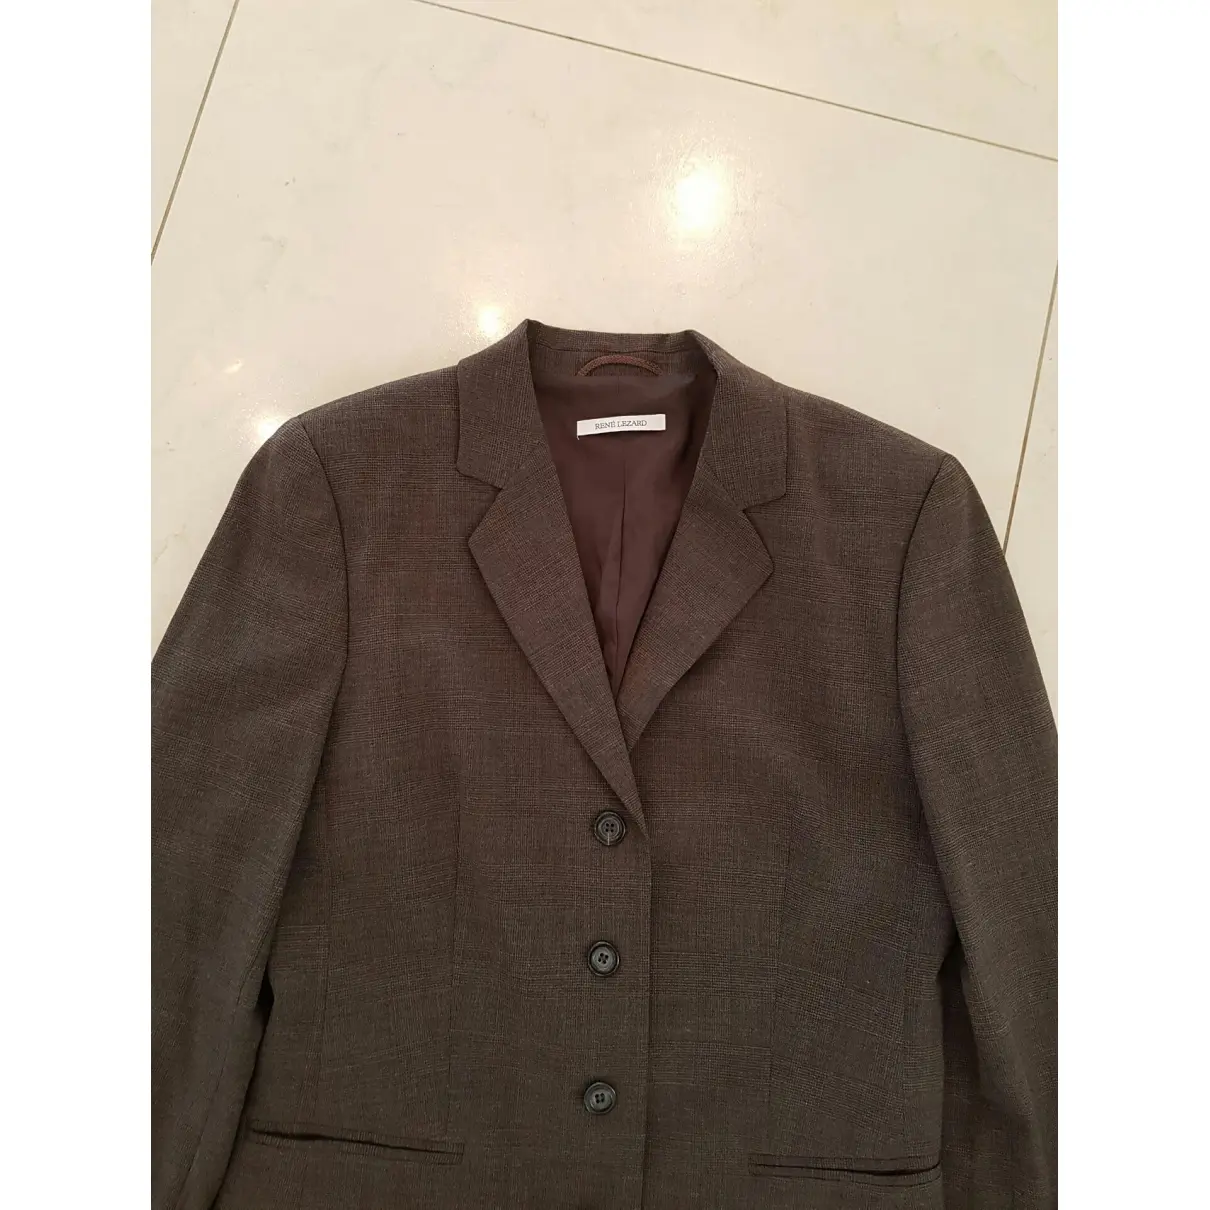 RENÉ LEZARD Wool blazer for sale